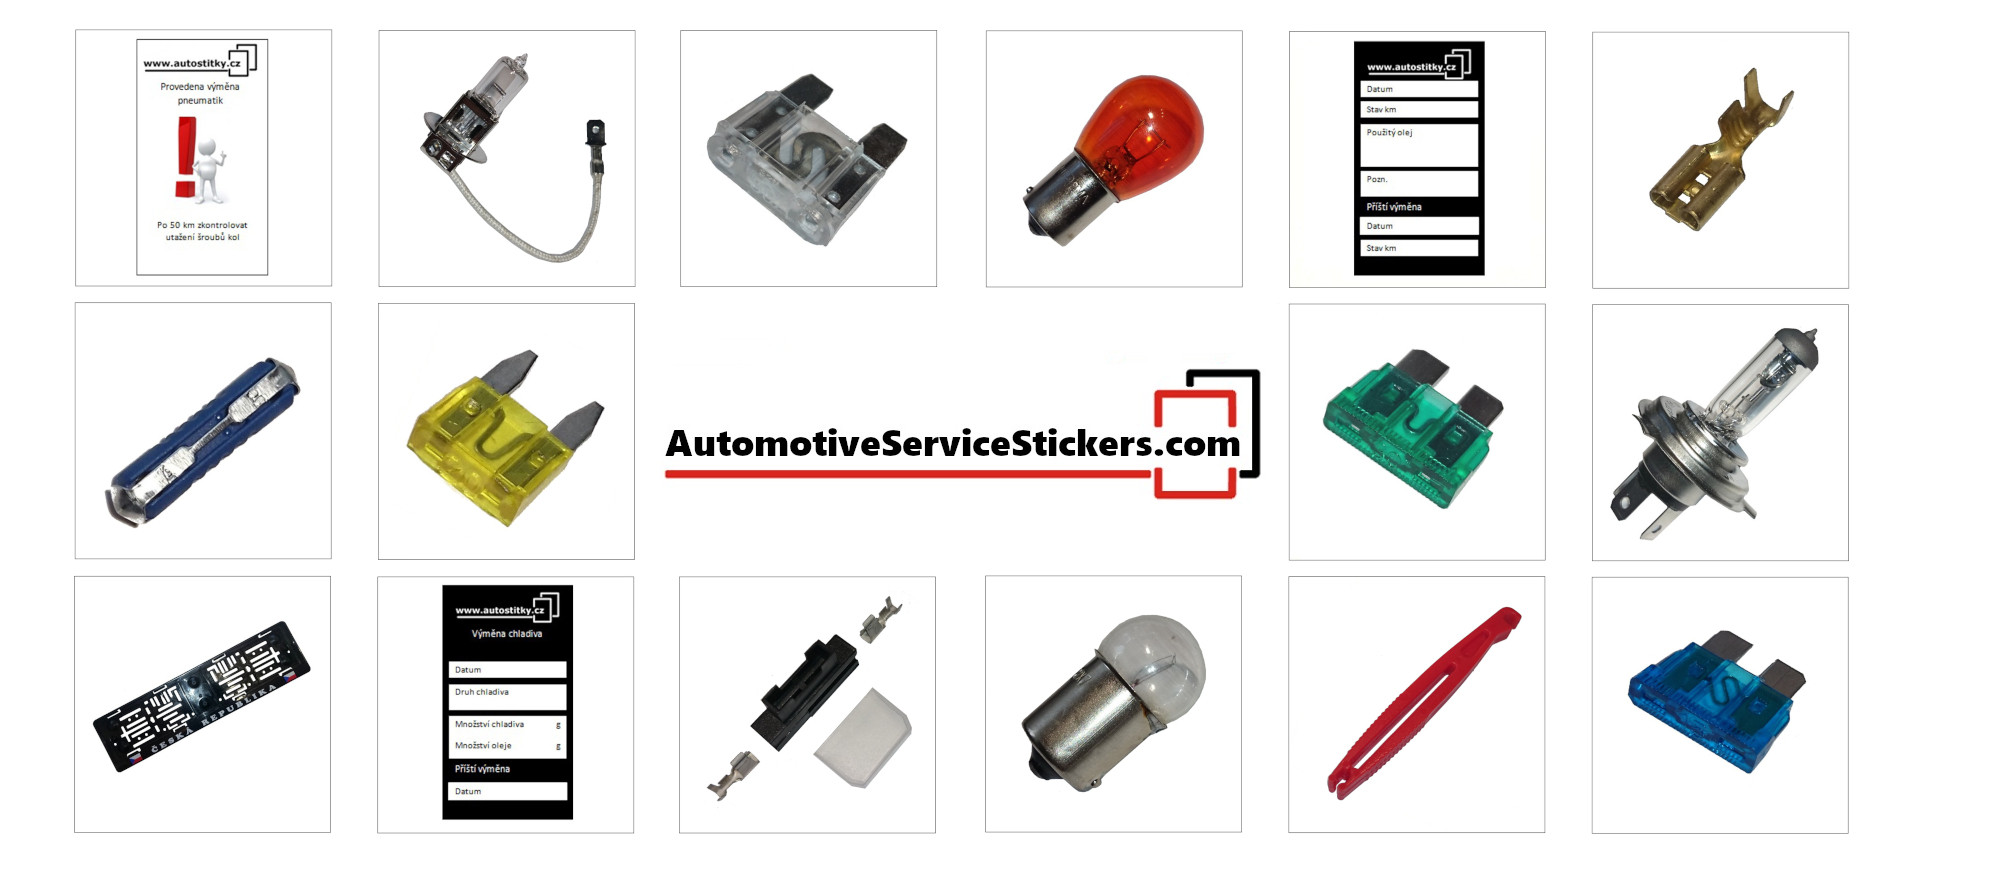 AutomotiveServiceStickers.com